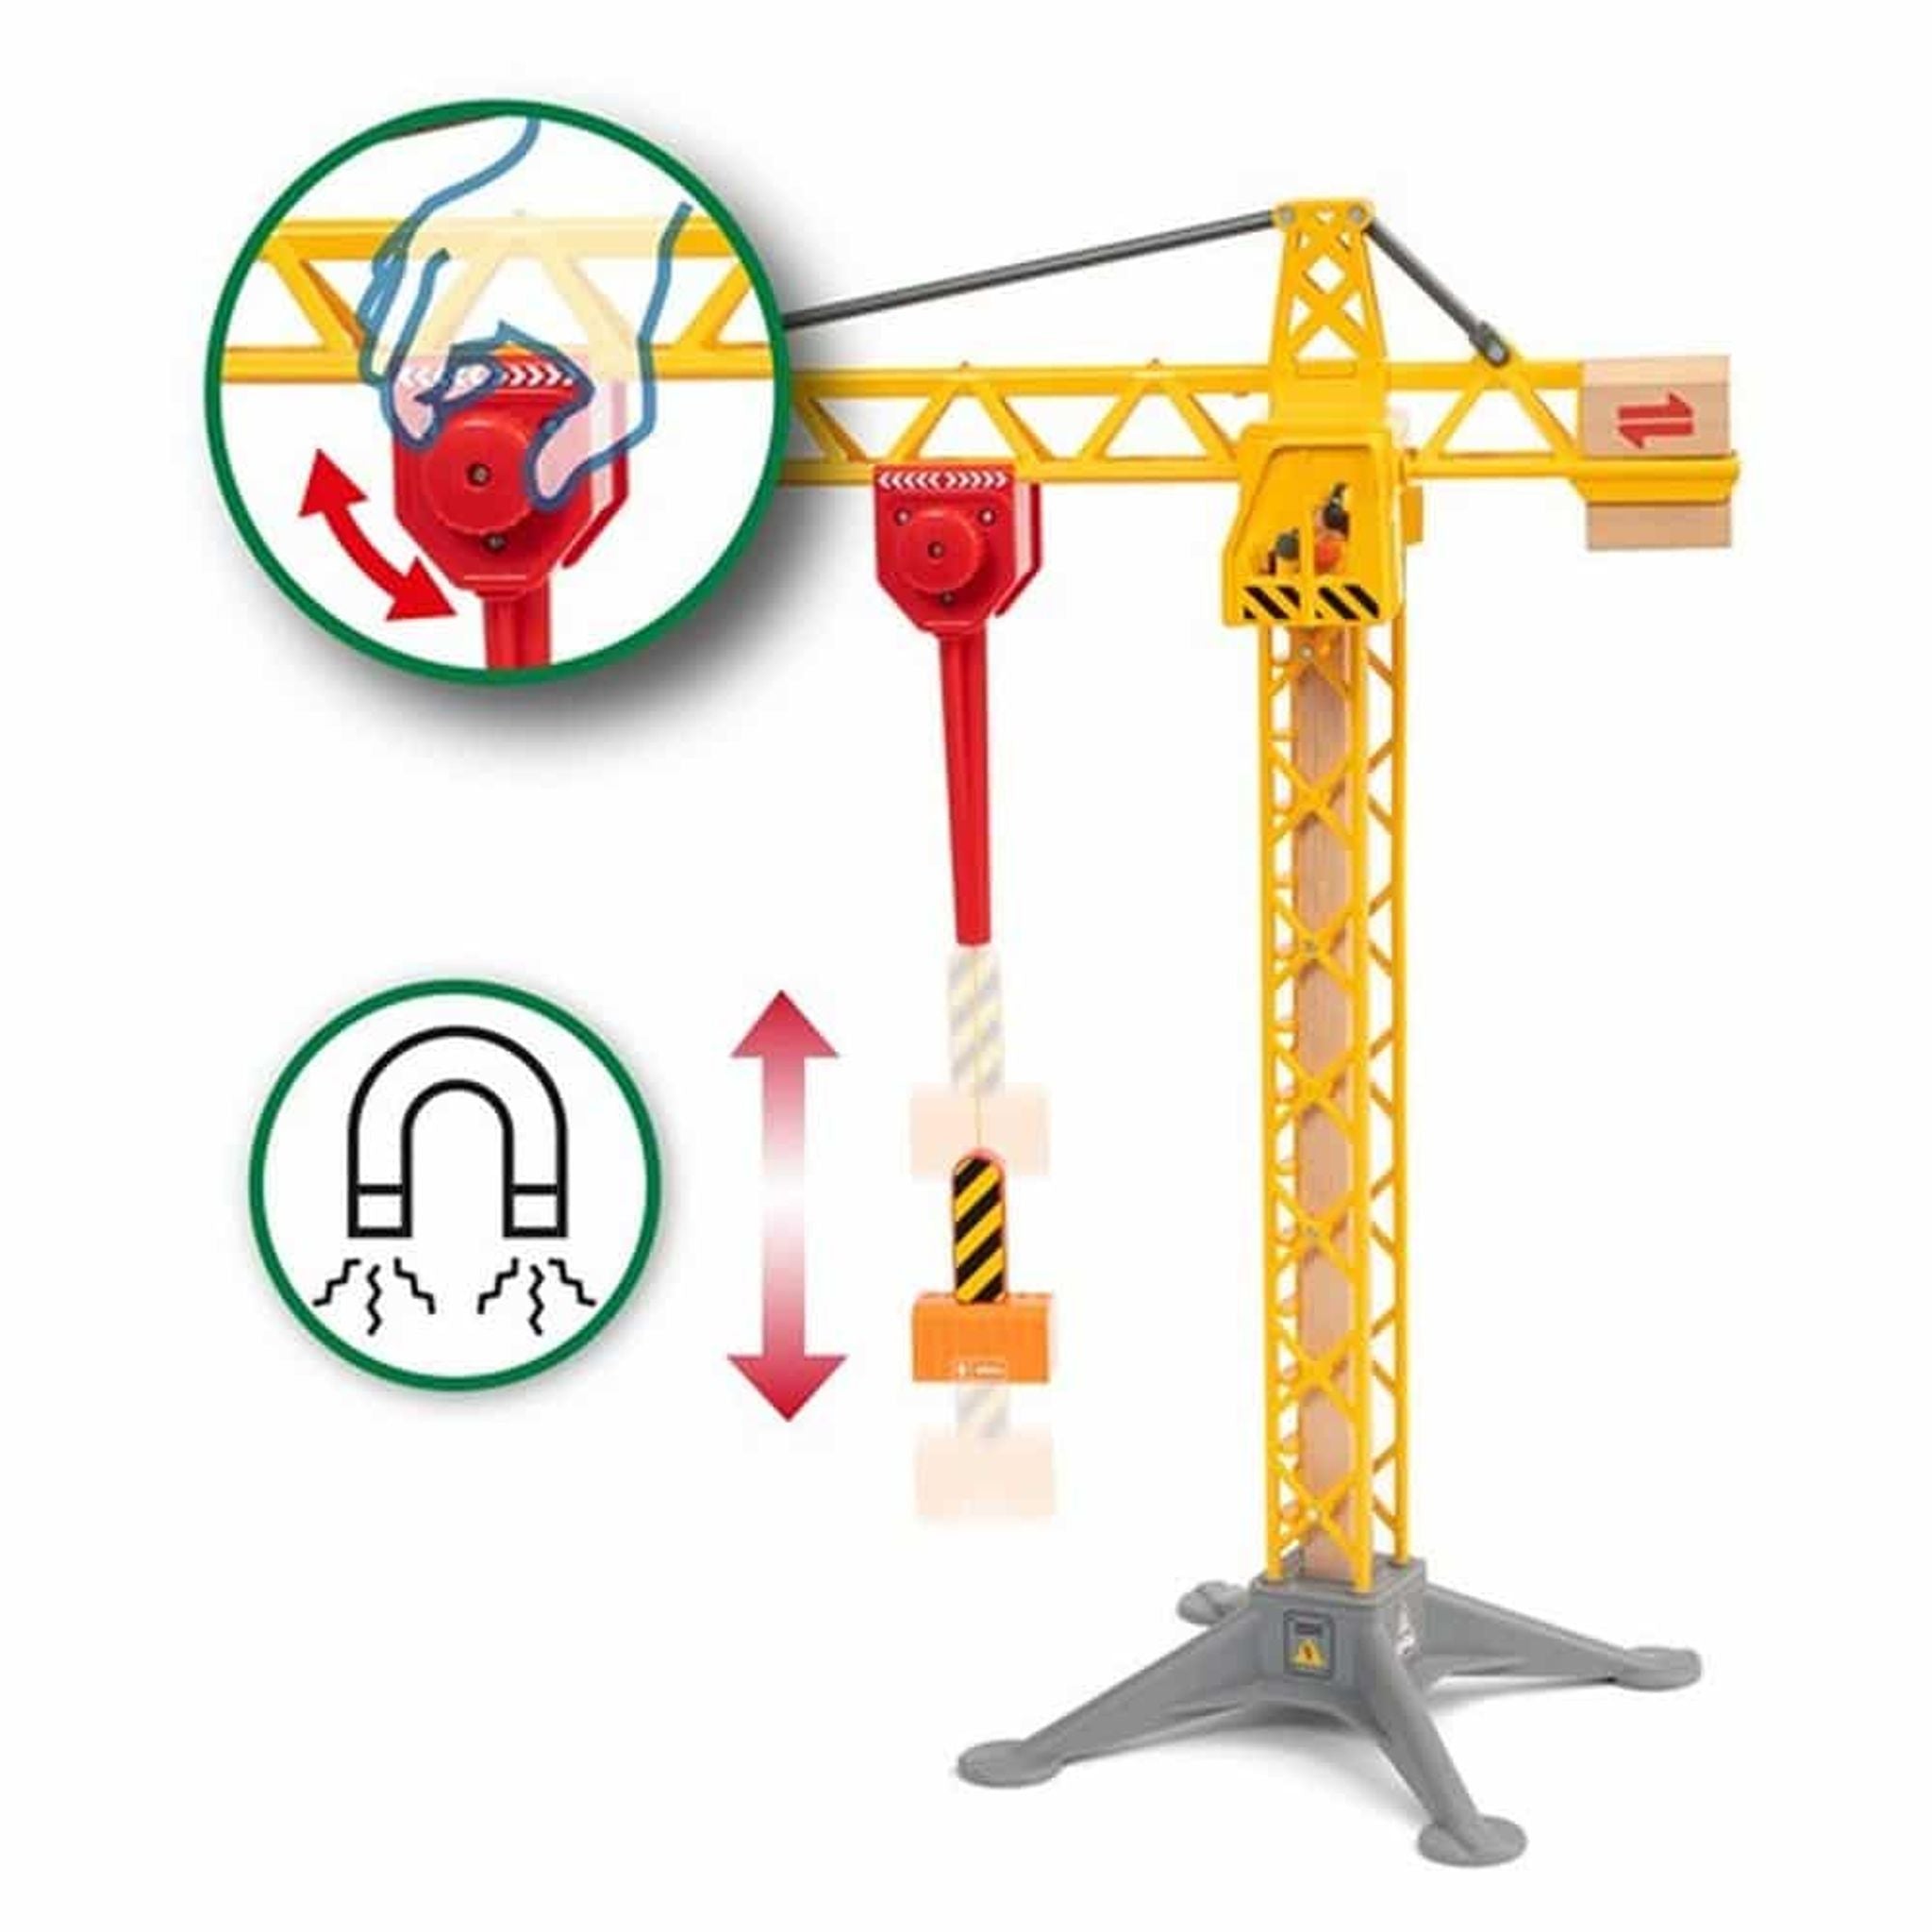 BRIO Crane - Construction Crane with Lights 5 pieces - Toybox Tales